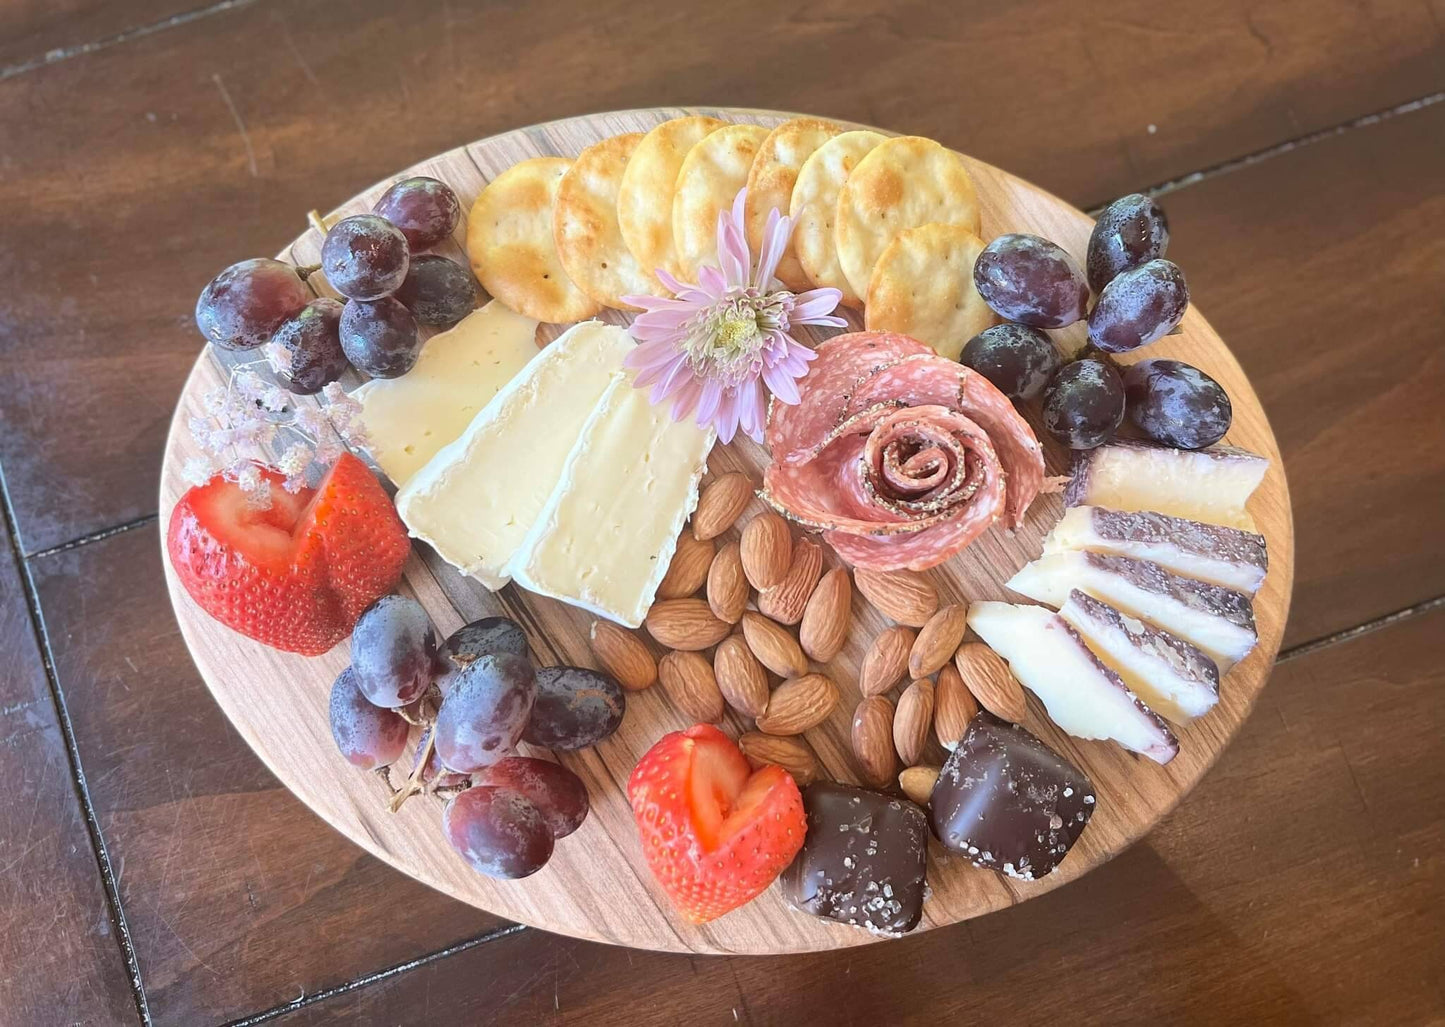 Charcuterie Board - Cheese Board - Cutting Board - Entertaining - Decor - Ambrosia Maple - Hardwood - Handmade - Distinctive and Unique